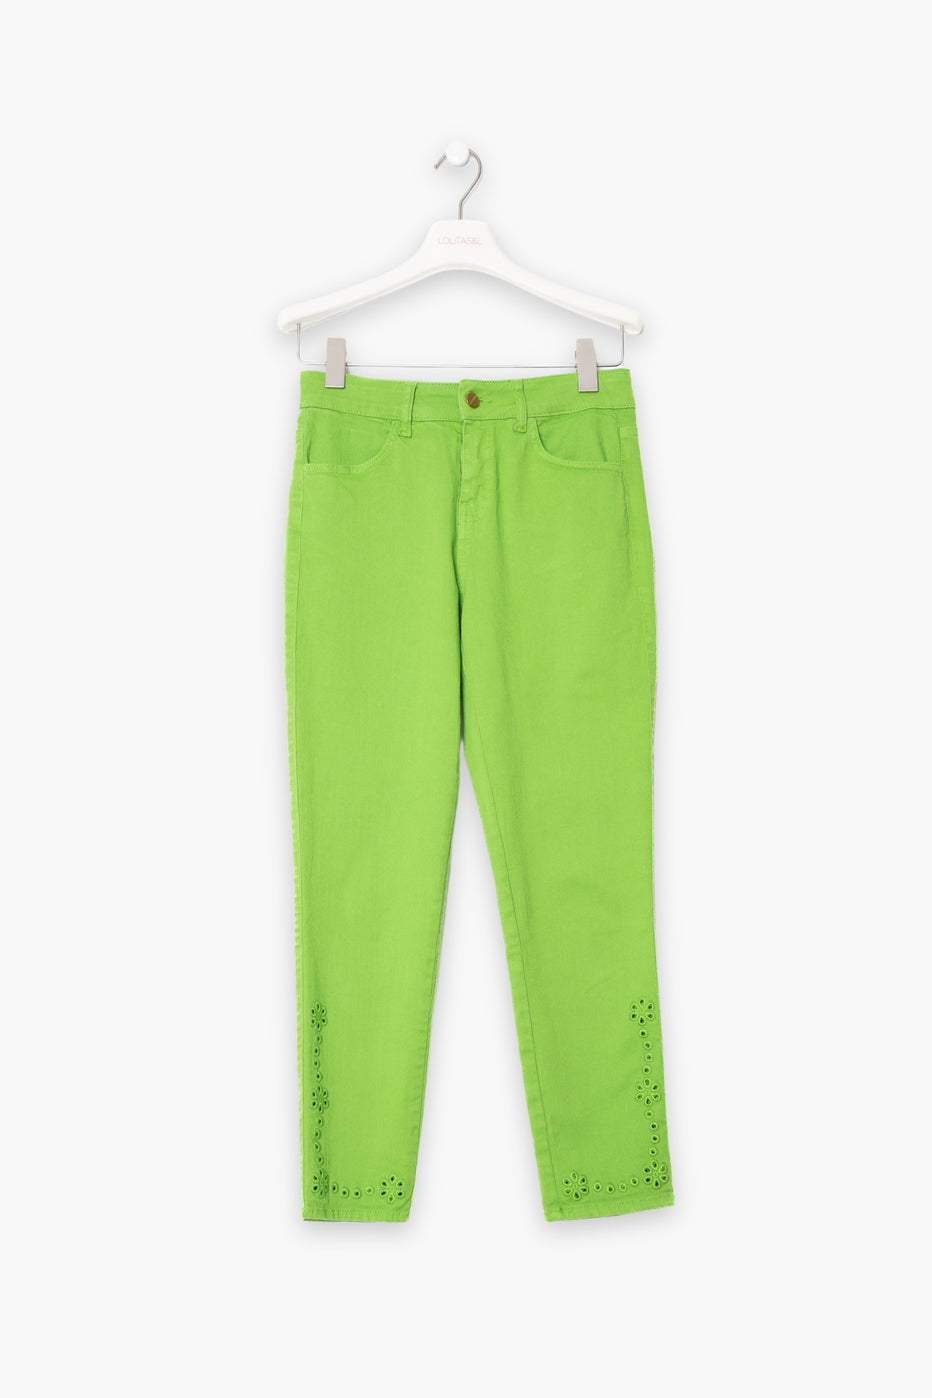 Pantalon verde pitillero cinco bolsillos con bordado LolitasyL - lolitasyl.com